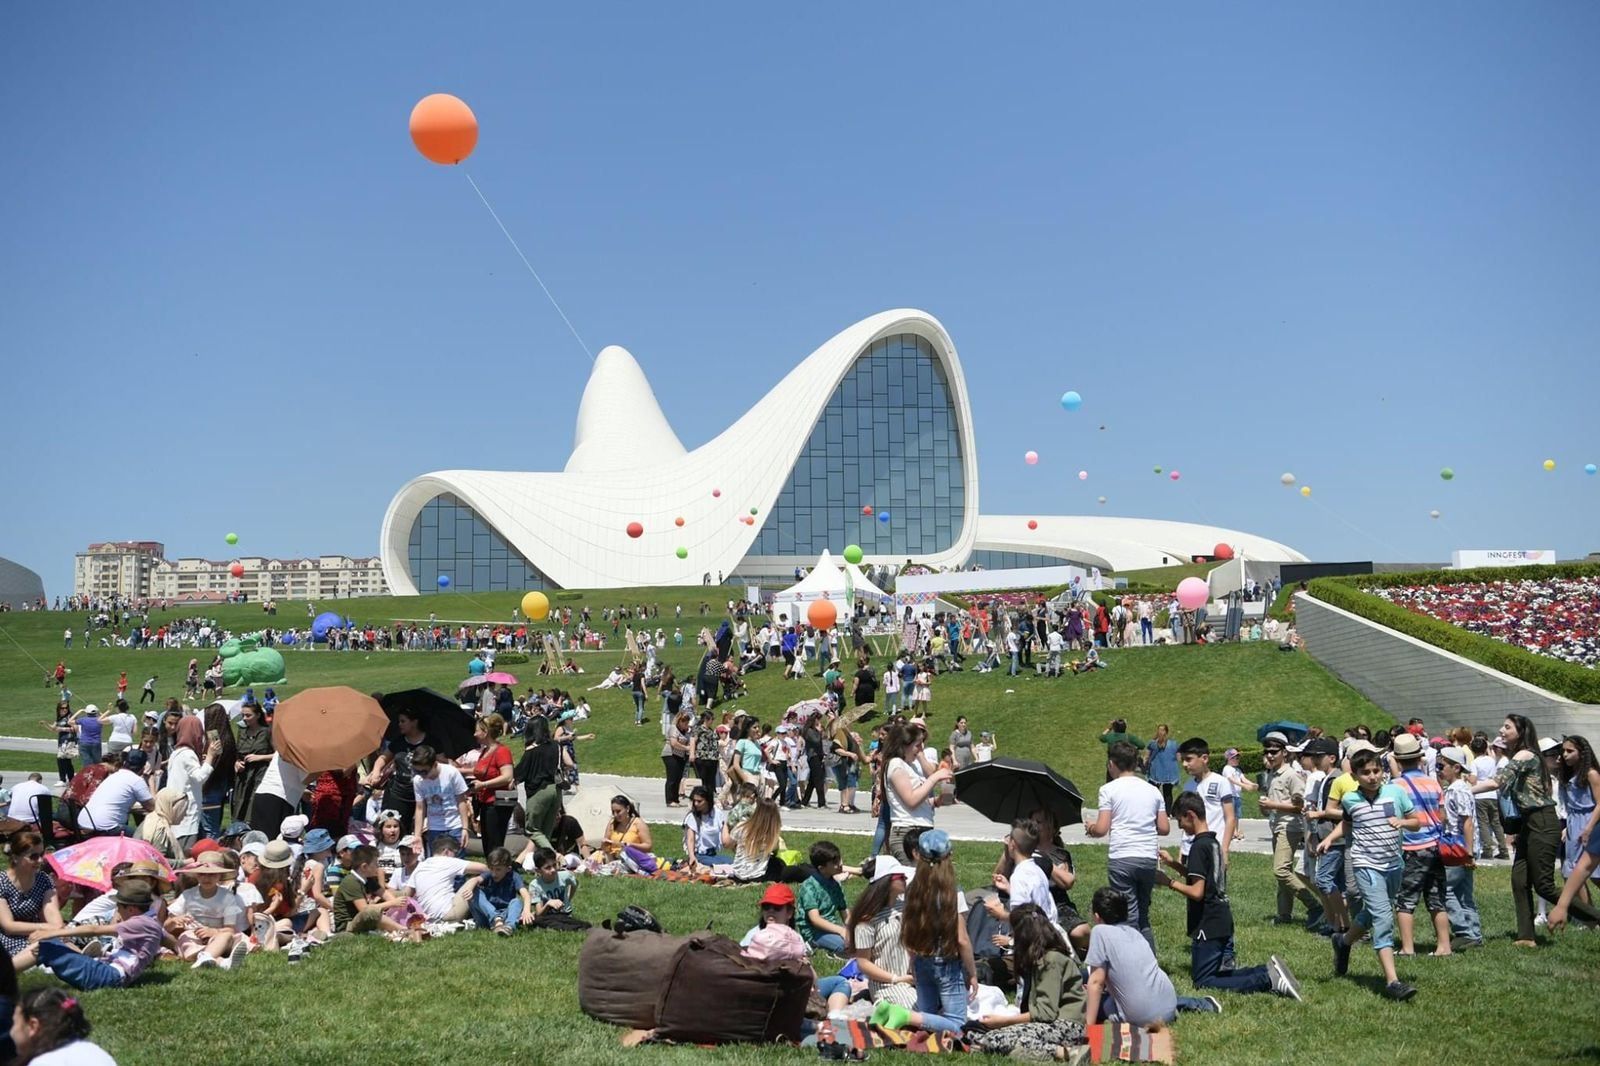 Heydar Aliyev Center to host Children's Festival